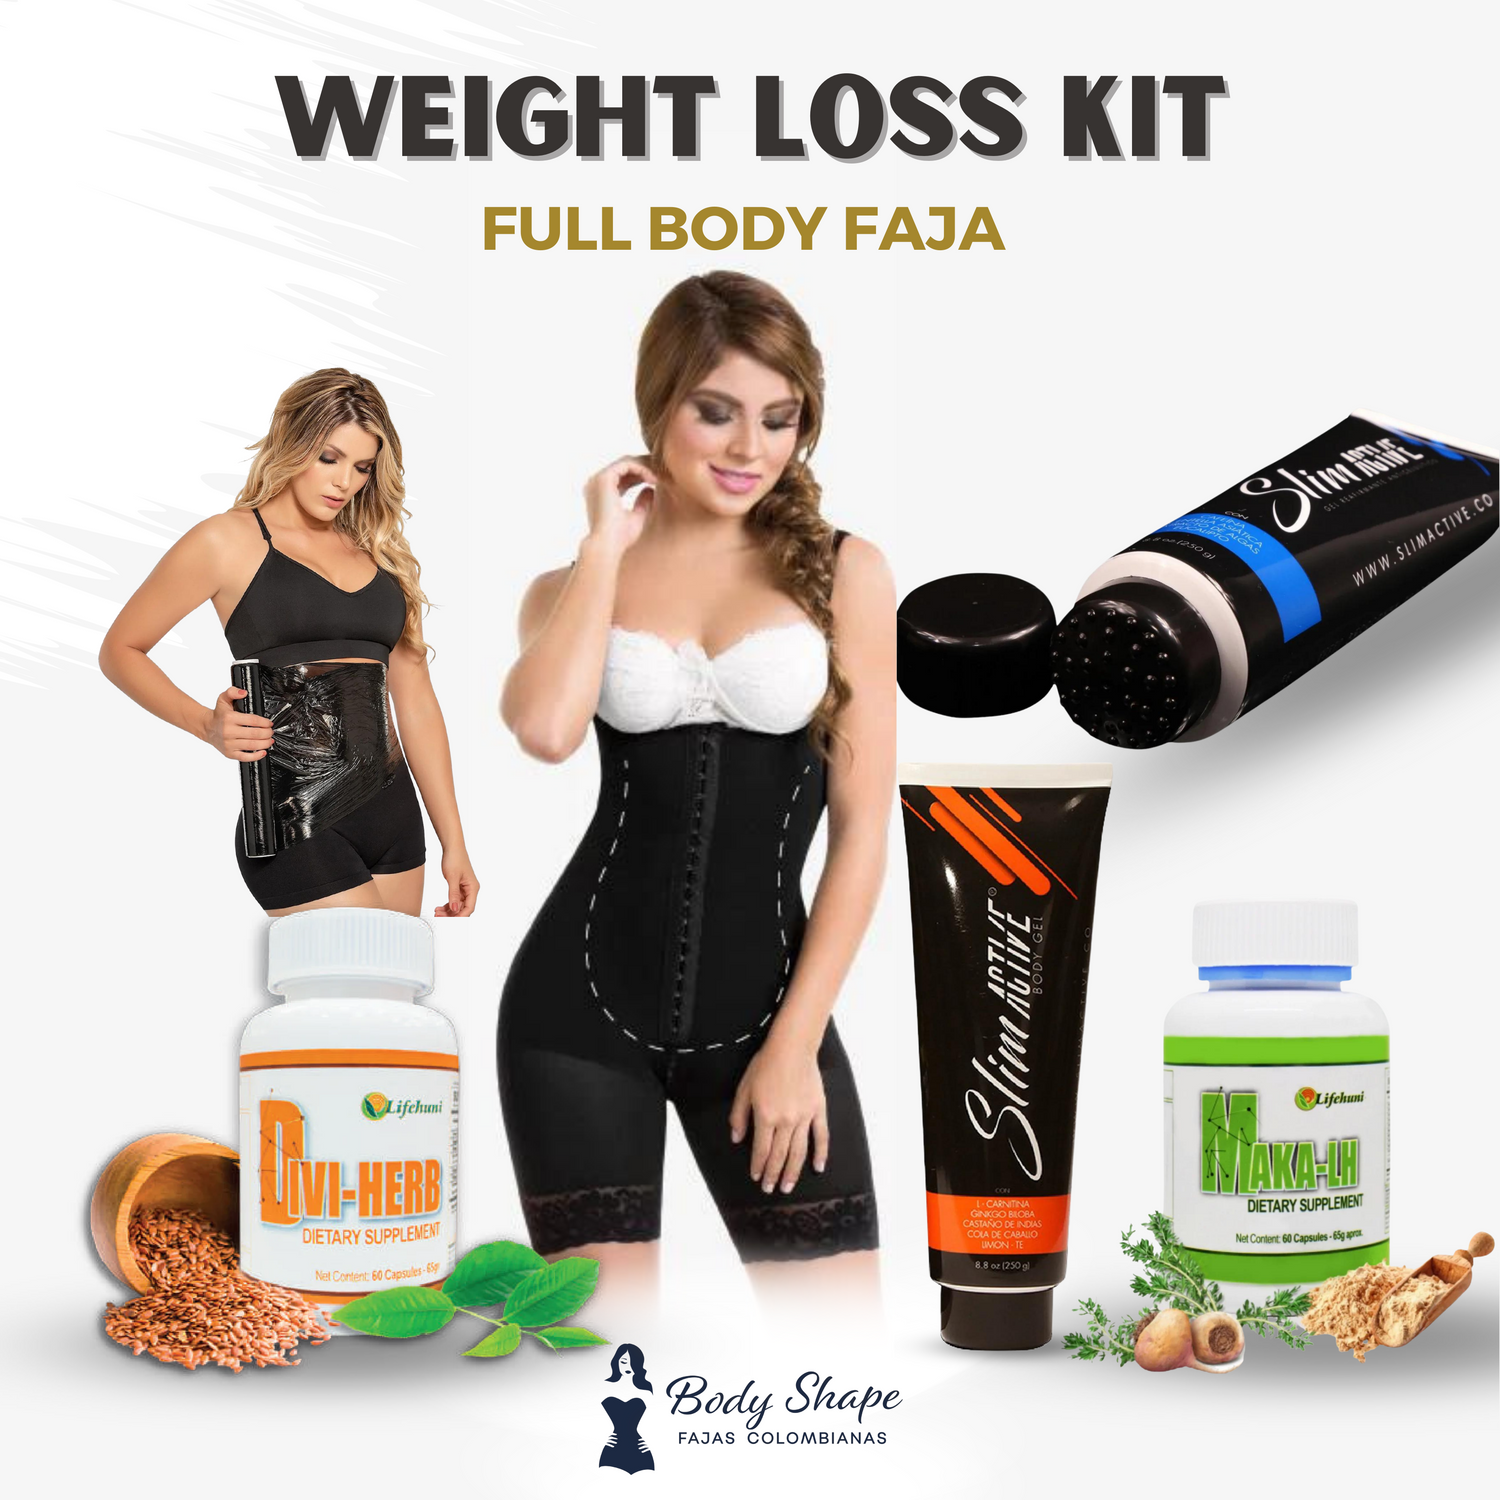 Weight-loss Kit Full Body Faja